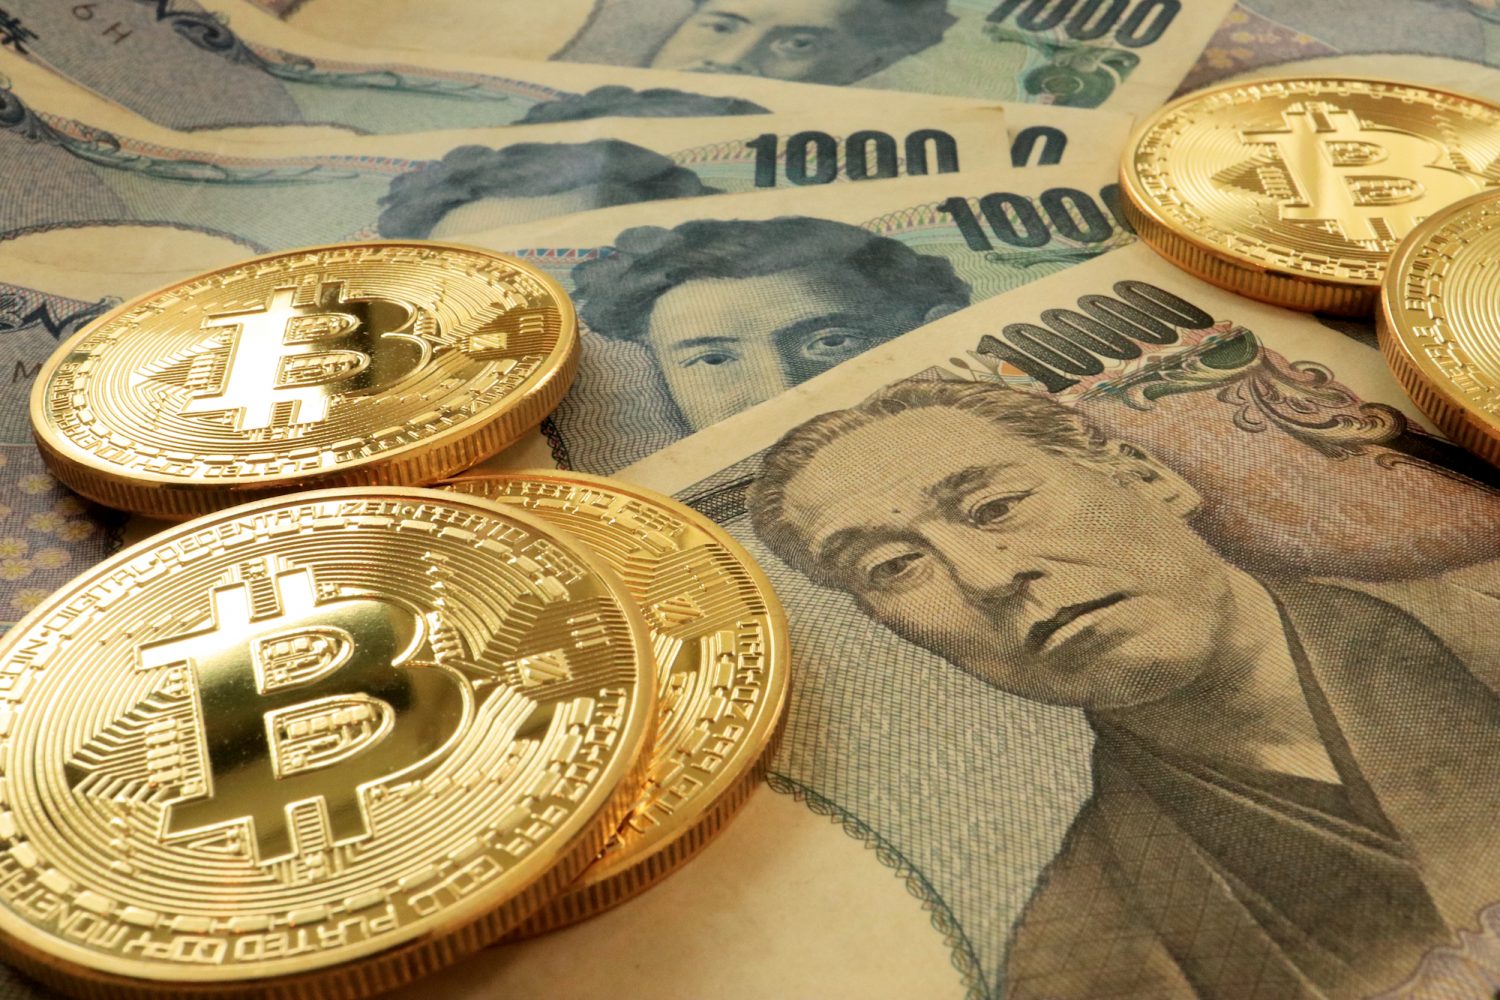 On bitFlyer Japan, Bitcoin Rewards Program Hits New Document